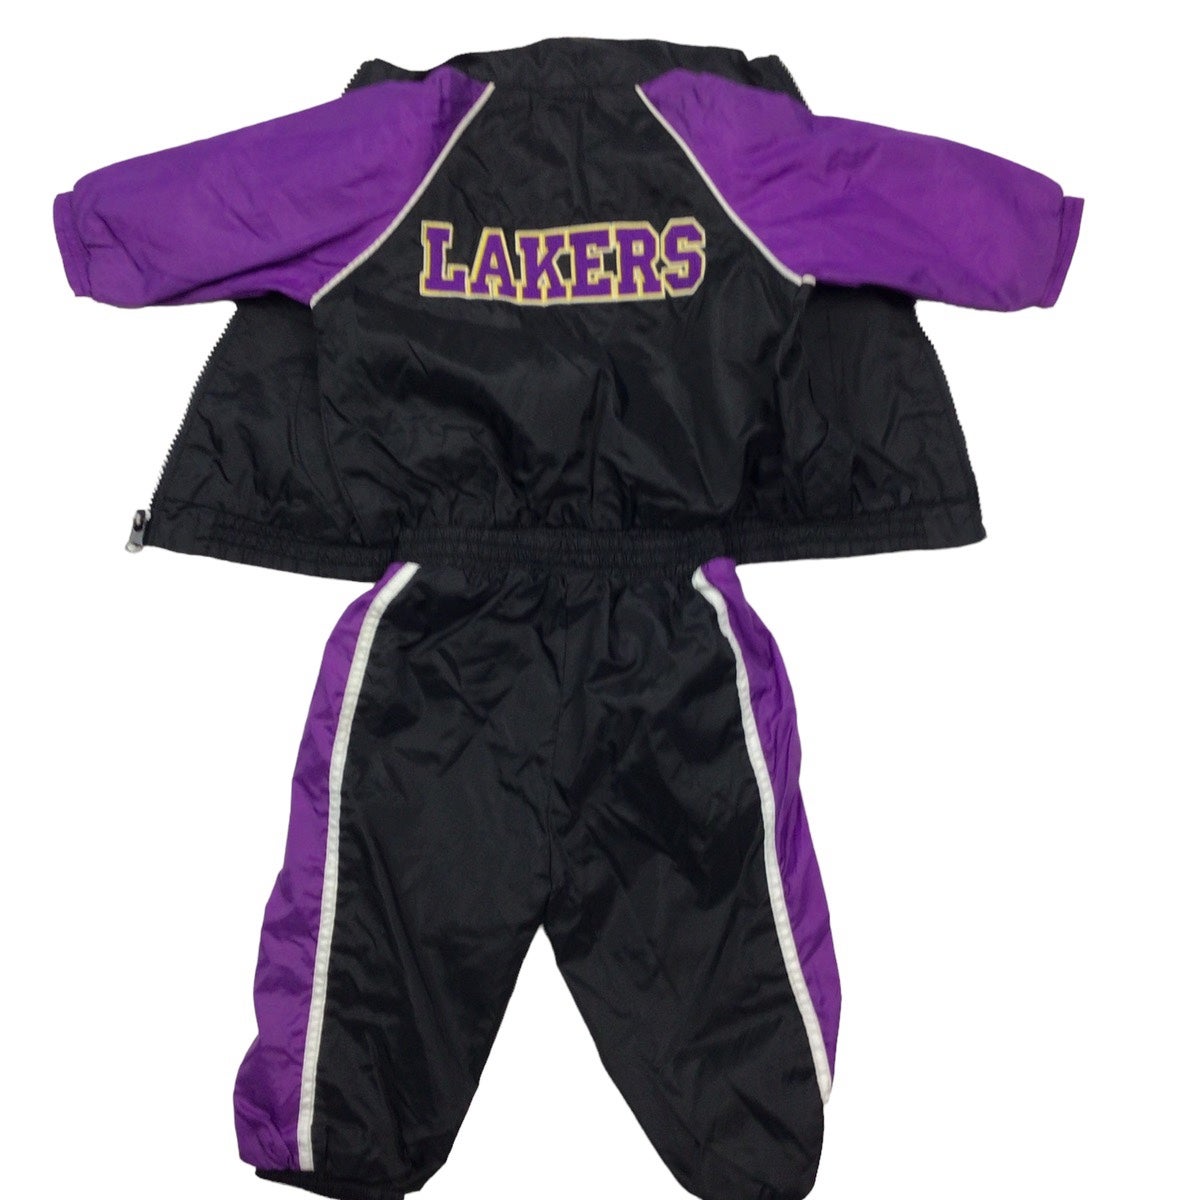 Vintage LA Lakers NBA track suit. Made in Korea. Mesh lining